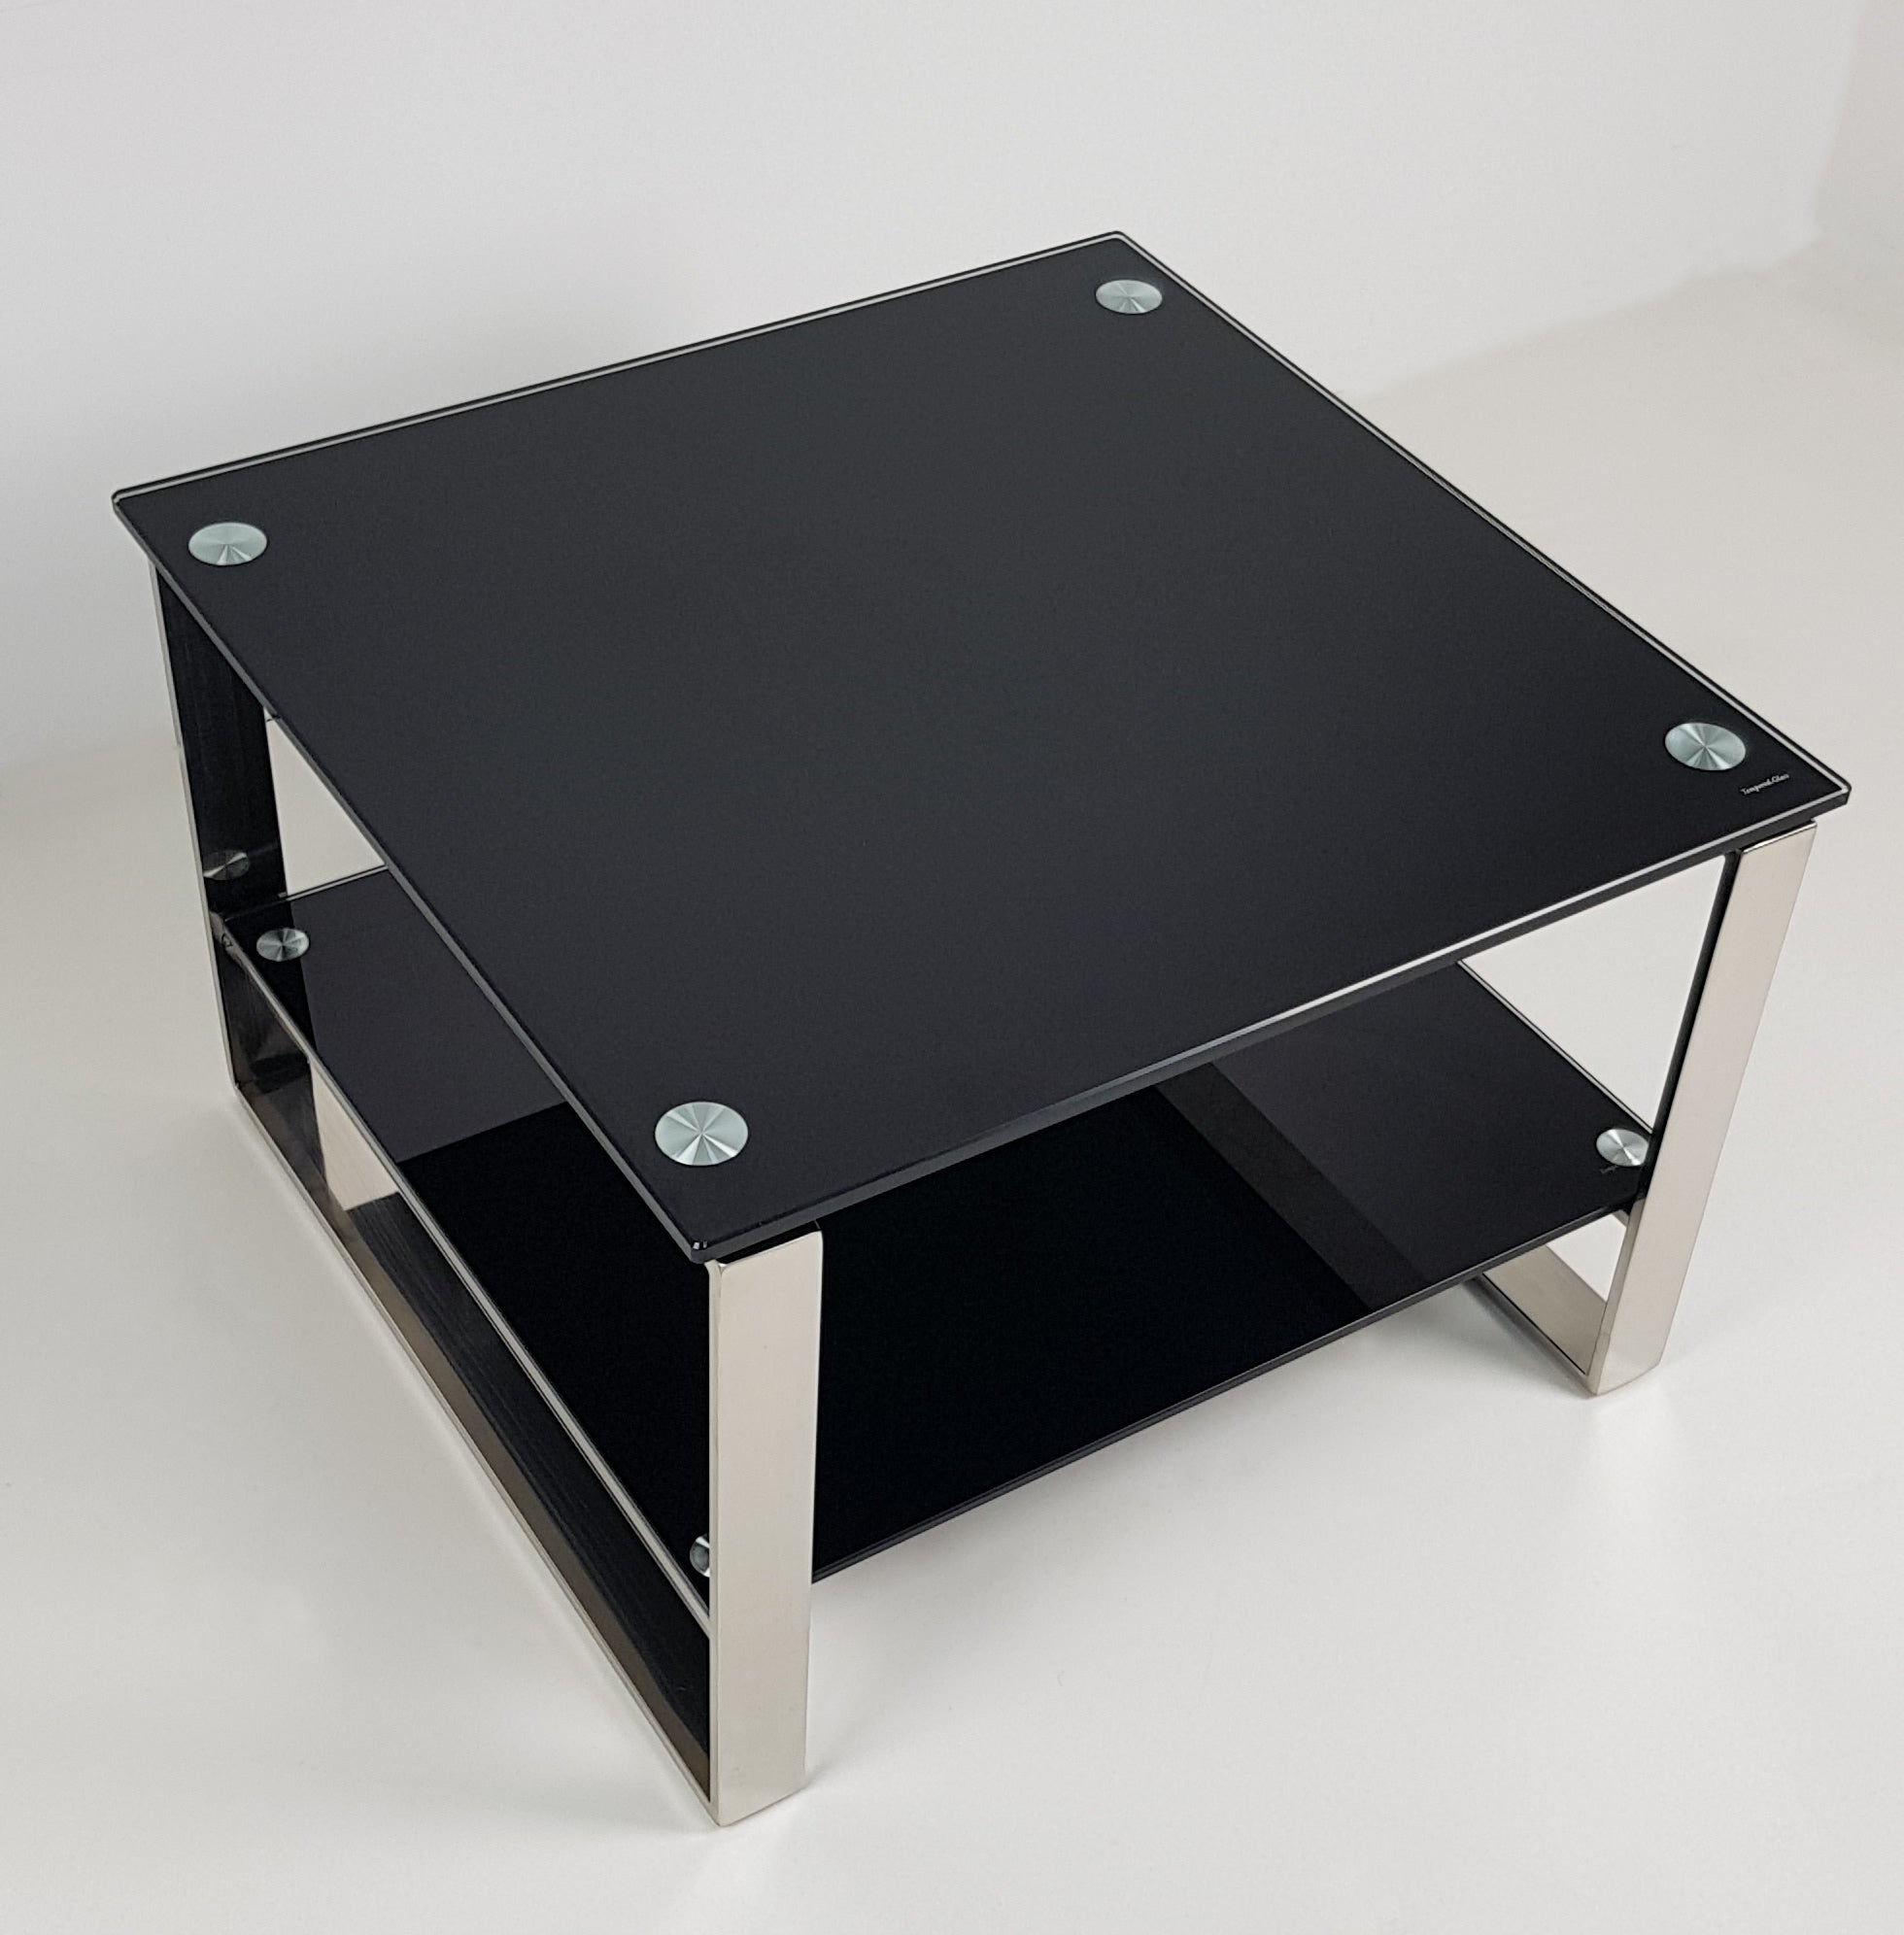 Double Shelf Black Glass Coffee Table - JDBLG-2